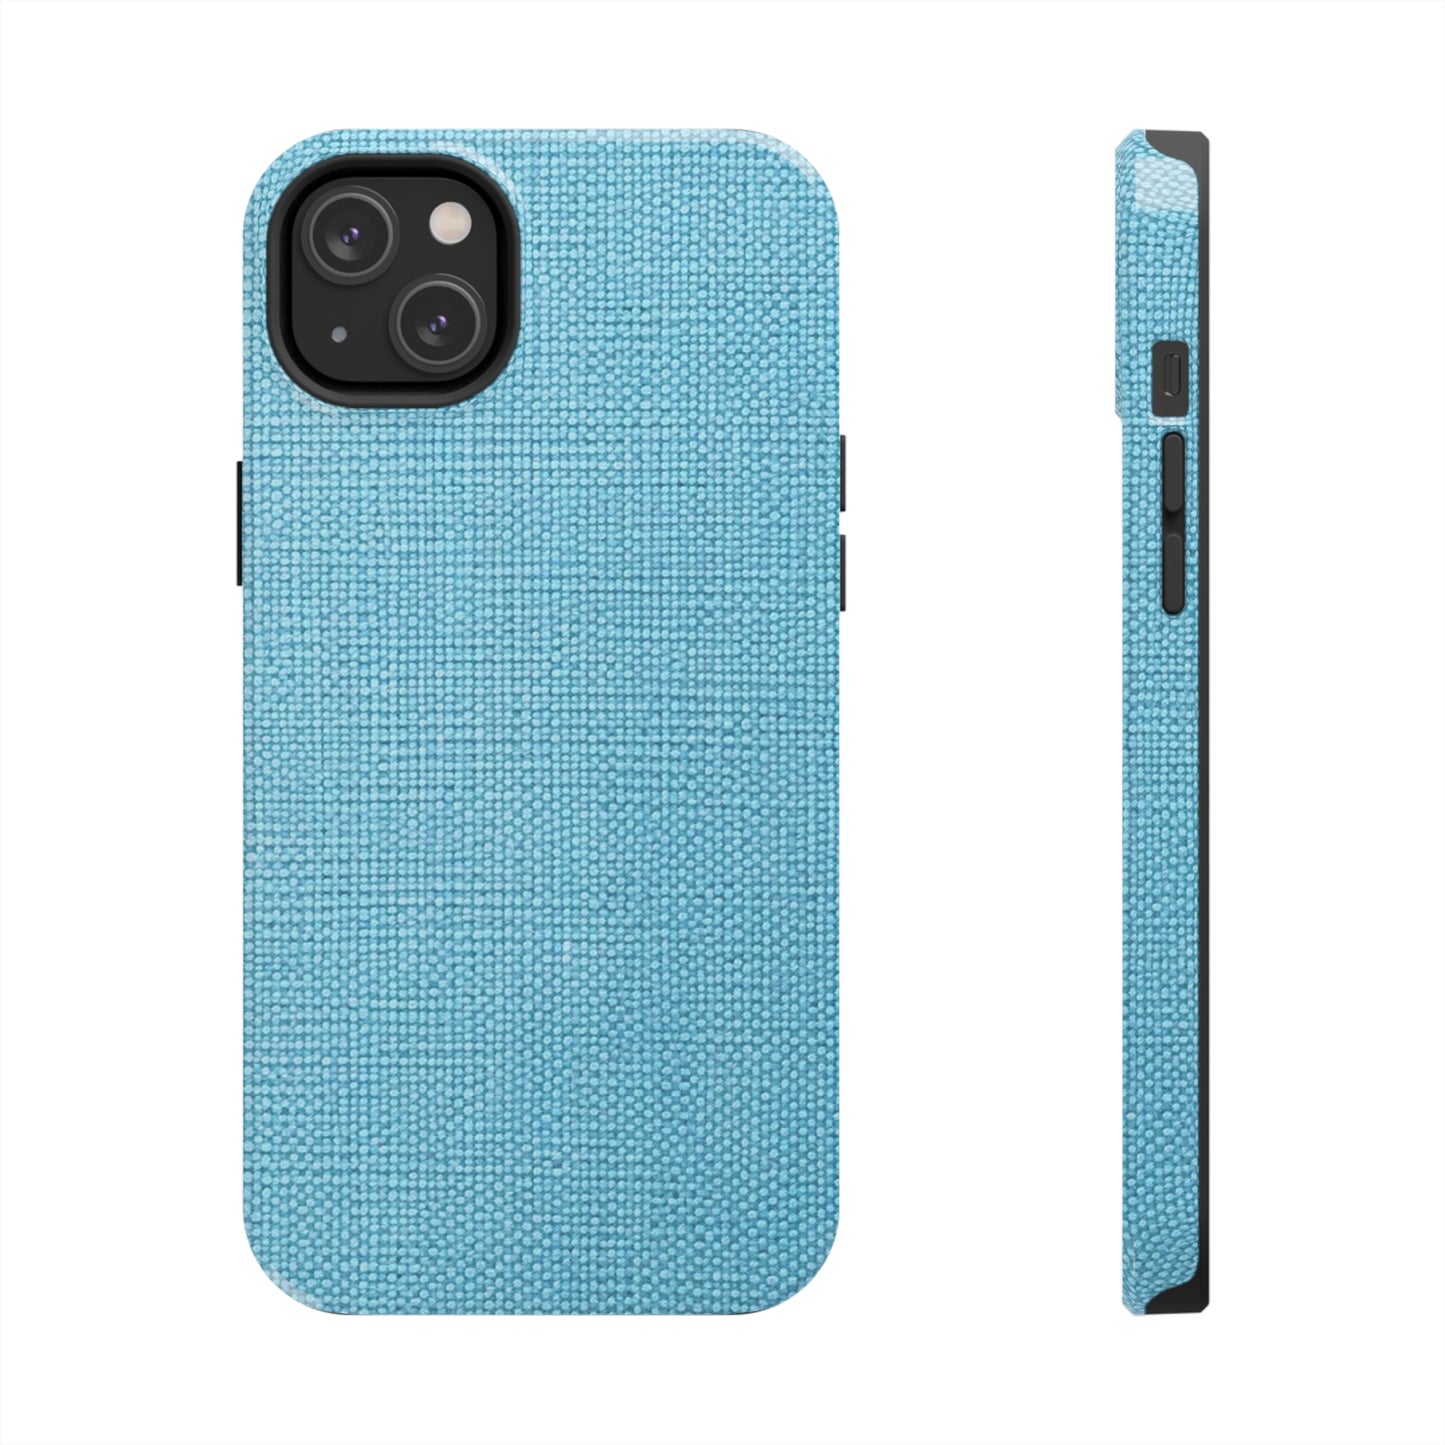 Bright Aqua Teal: Denim-Inspired Refreshing Blue Summer Fabric - Tough Phone Cases